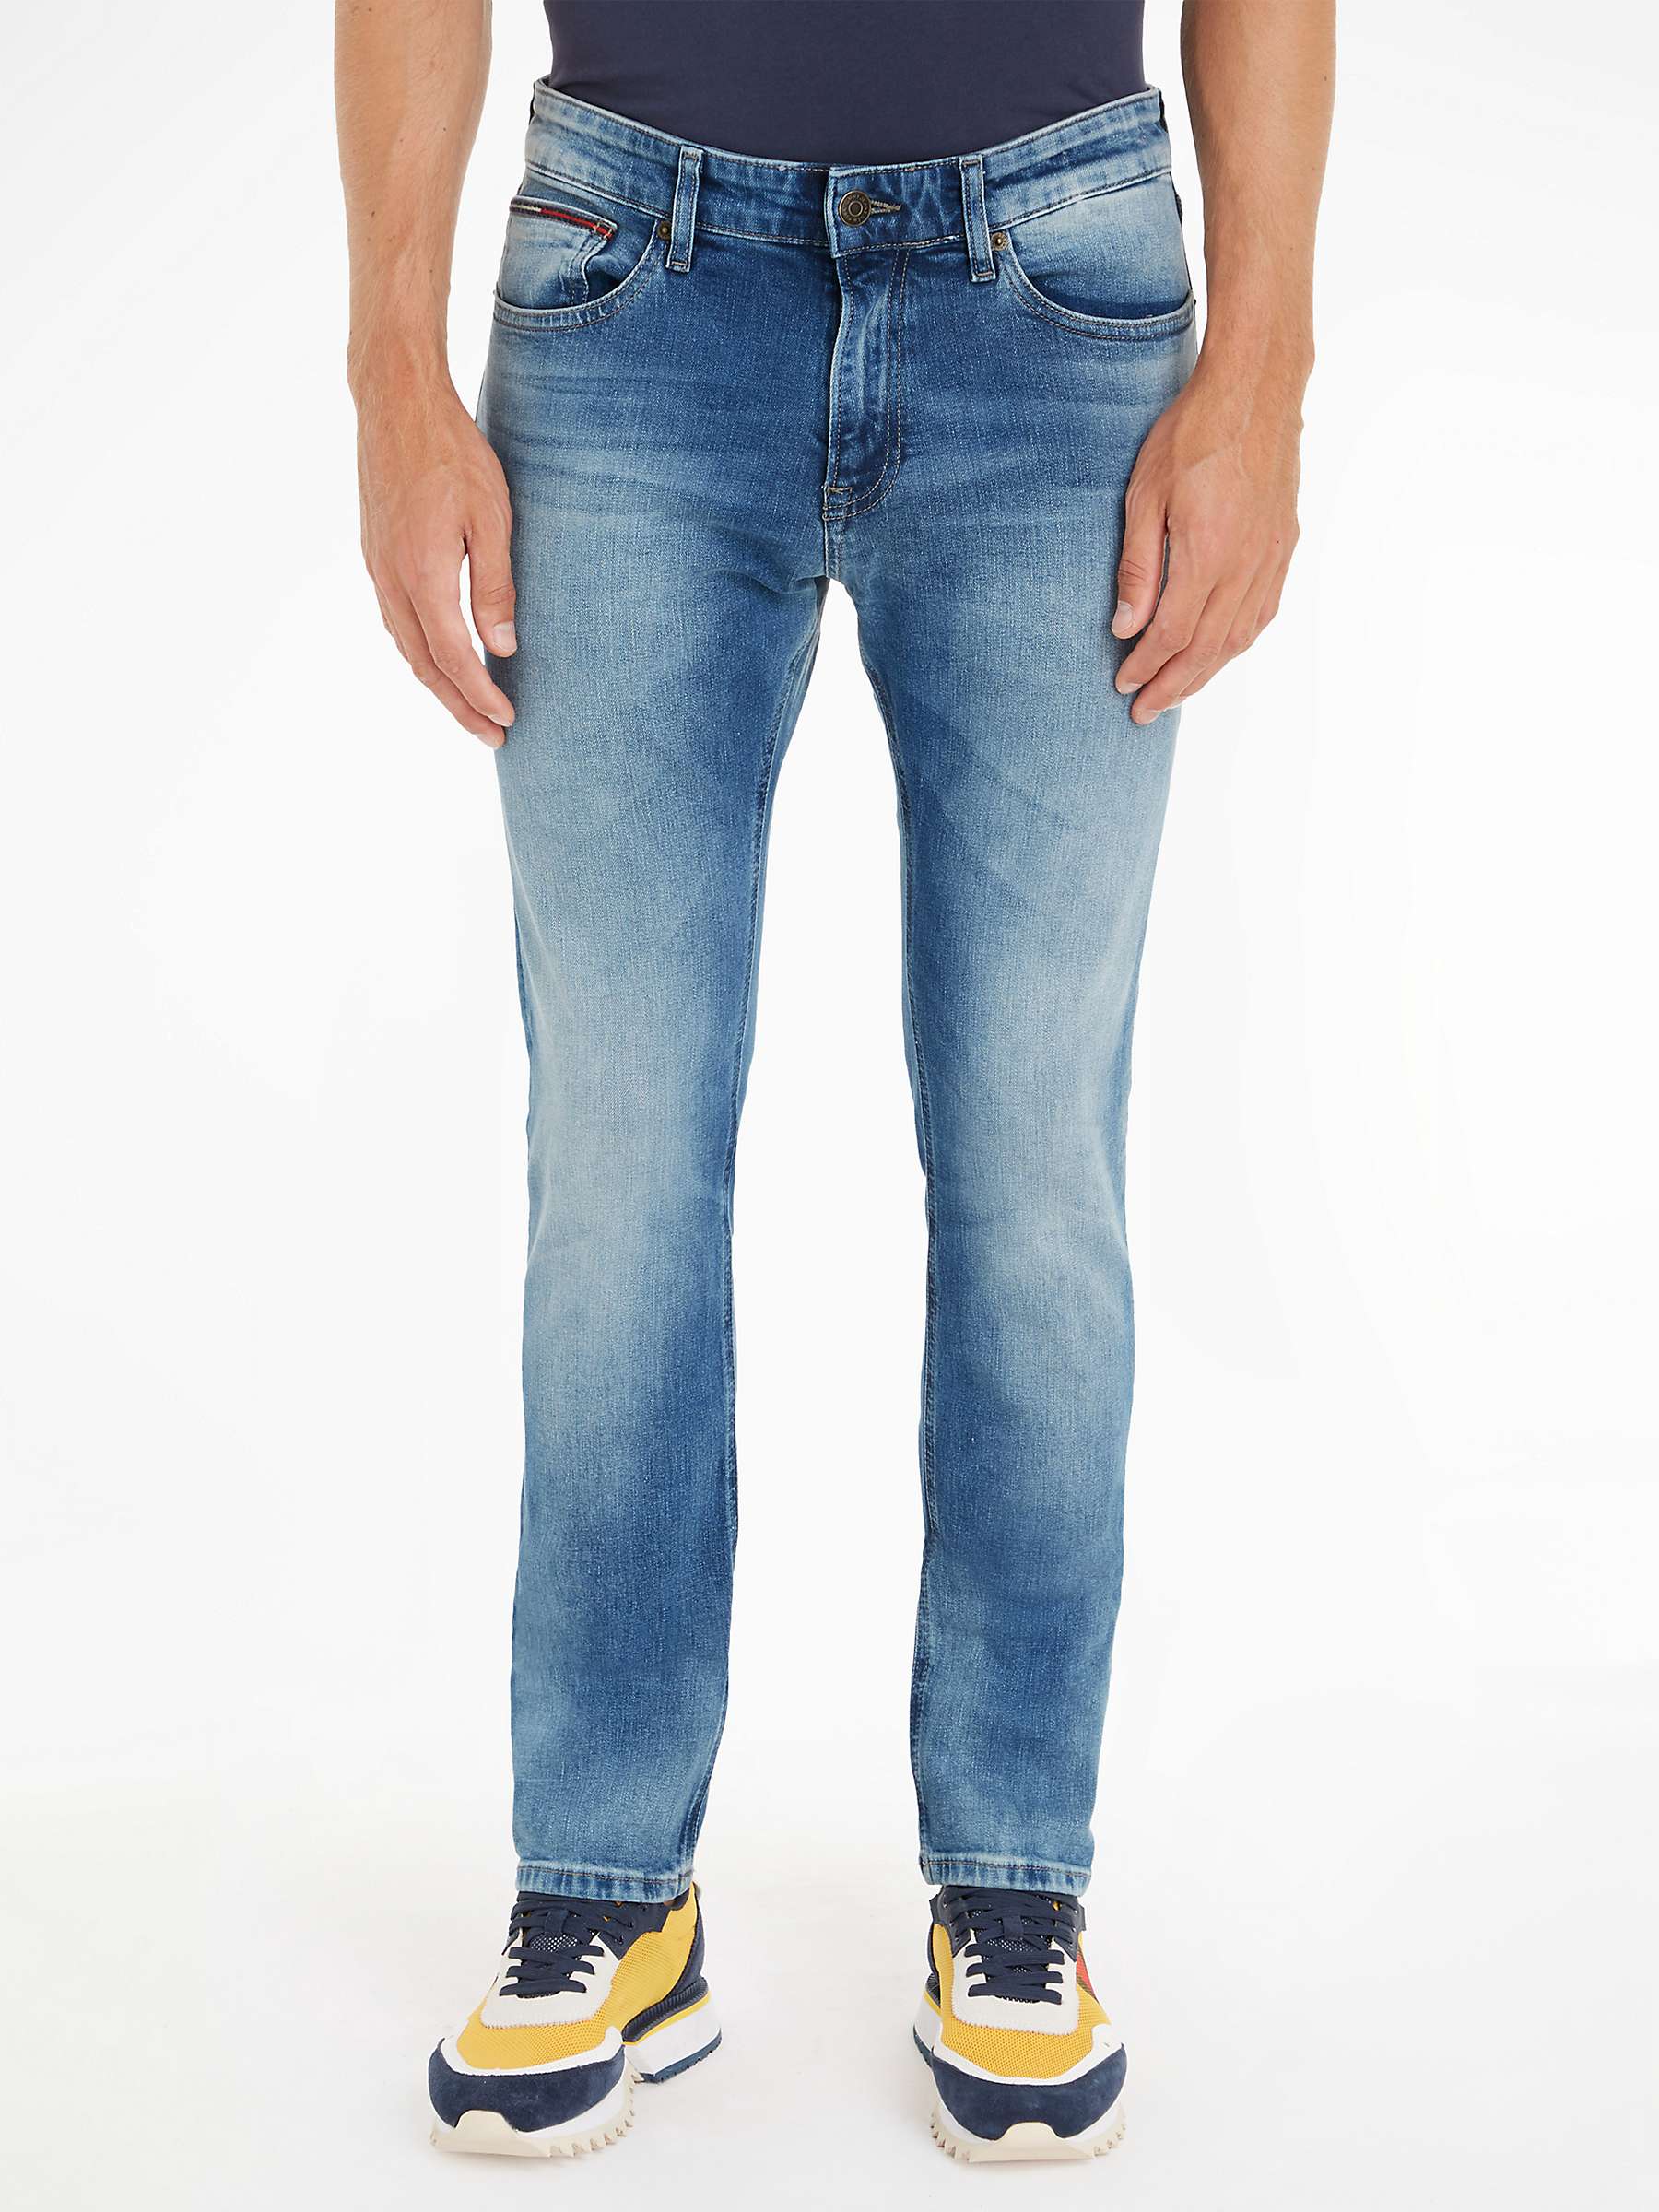 Buy Tommy Jeans Slim Scanton Jeans, Wilson Light Blue Online at johnlewis.com